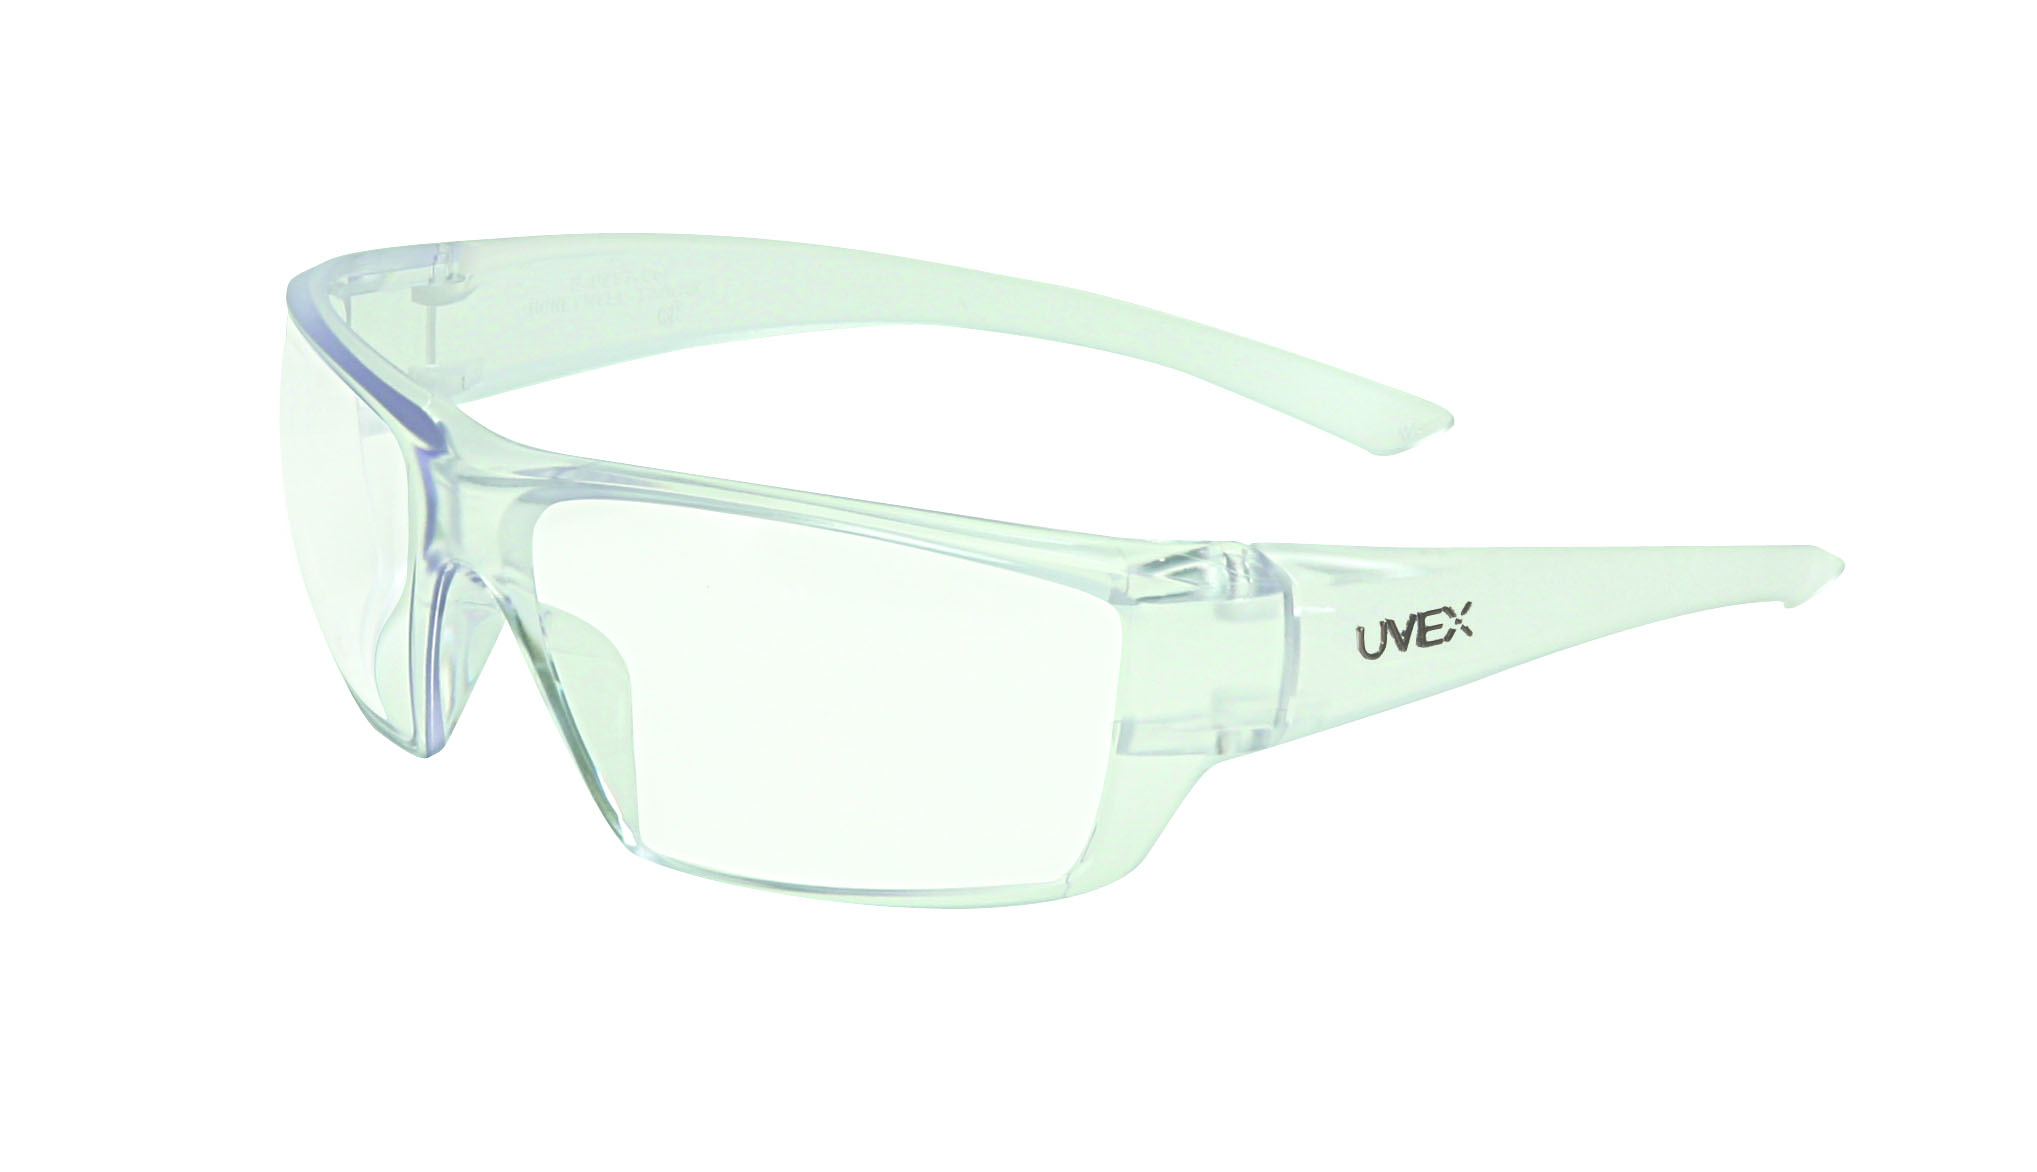 Honeywell Clear Lens Safety Glasses XV400